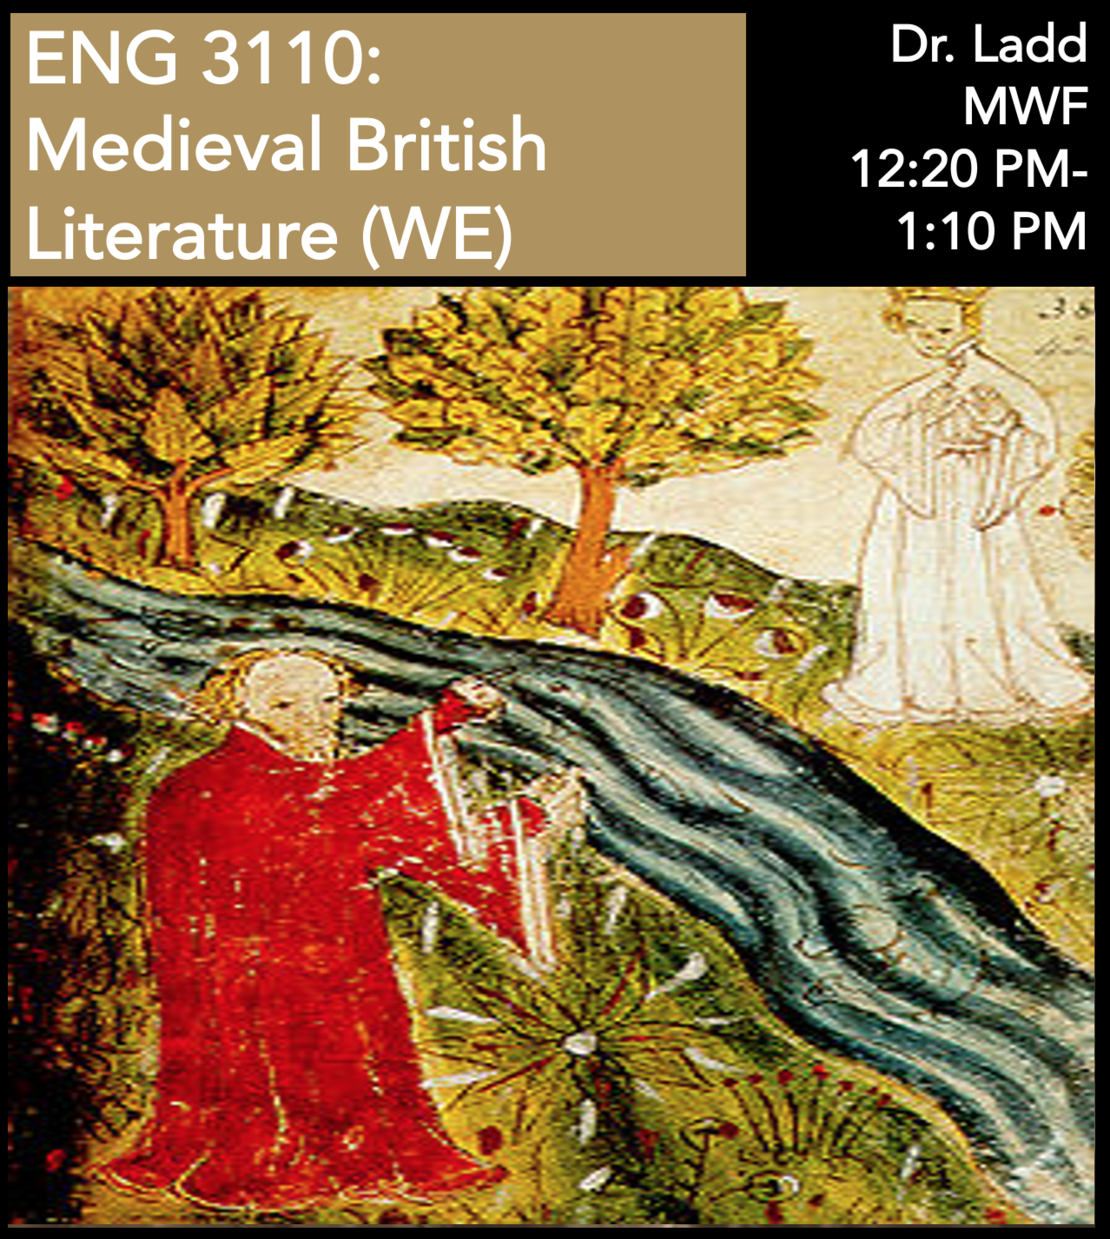 ENG 3110: Medieval British Literature (WE) Dr. Ladd MWF 12:20-1:10 PM